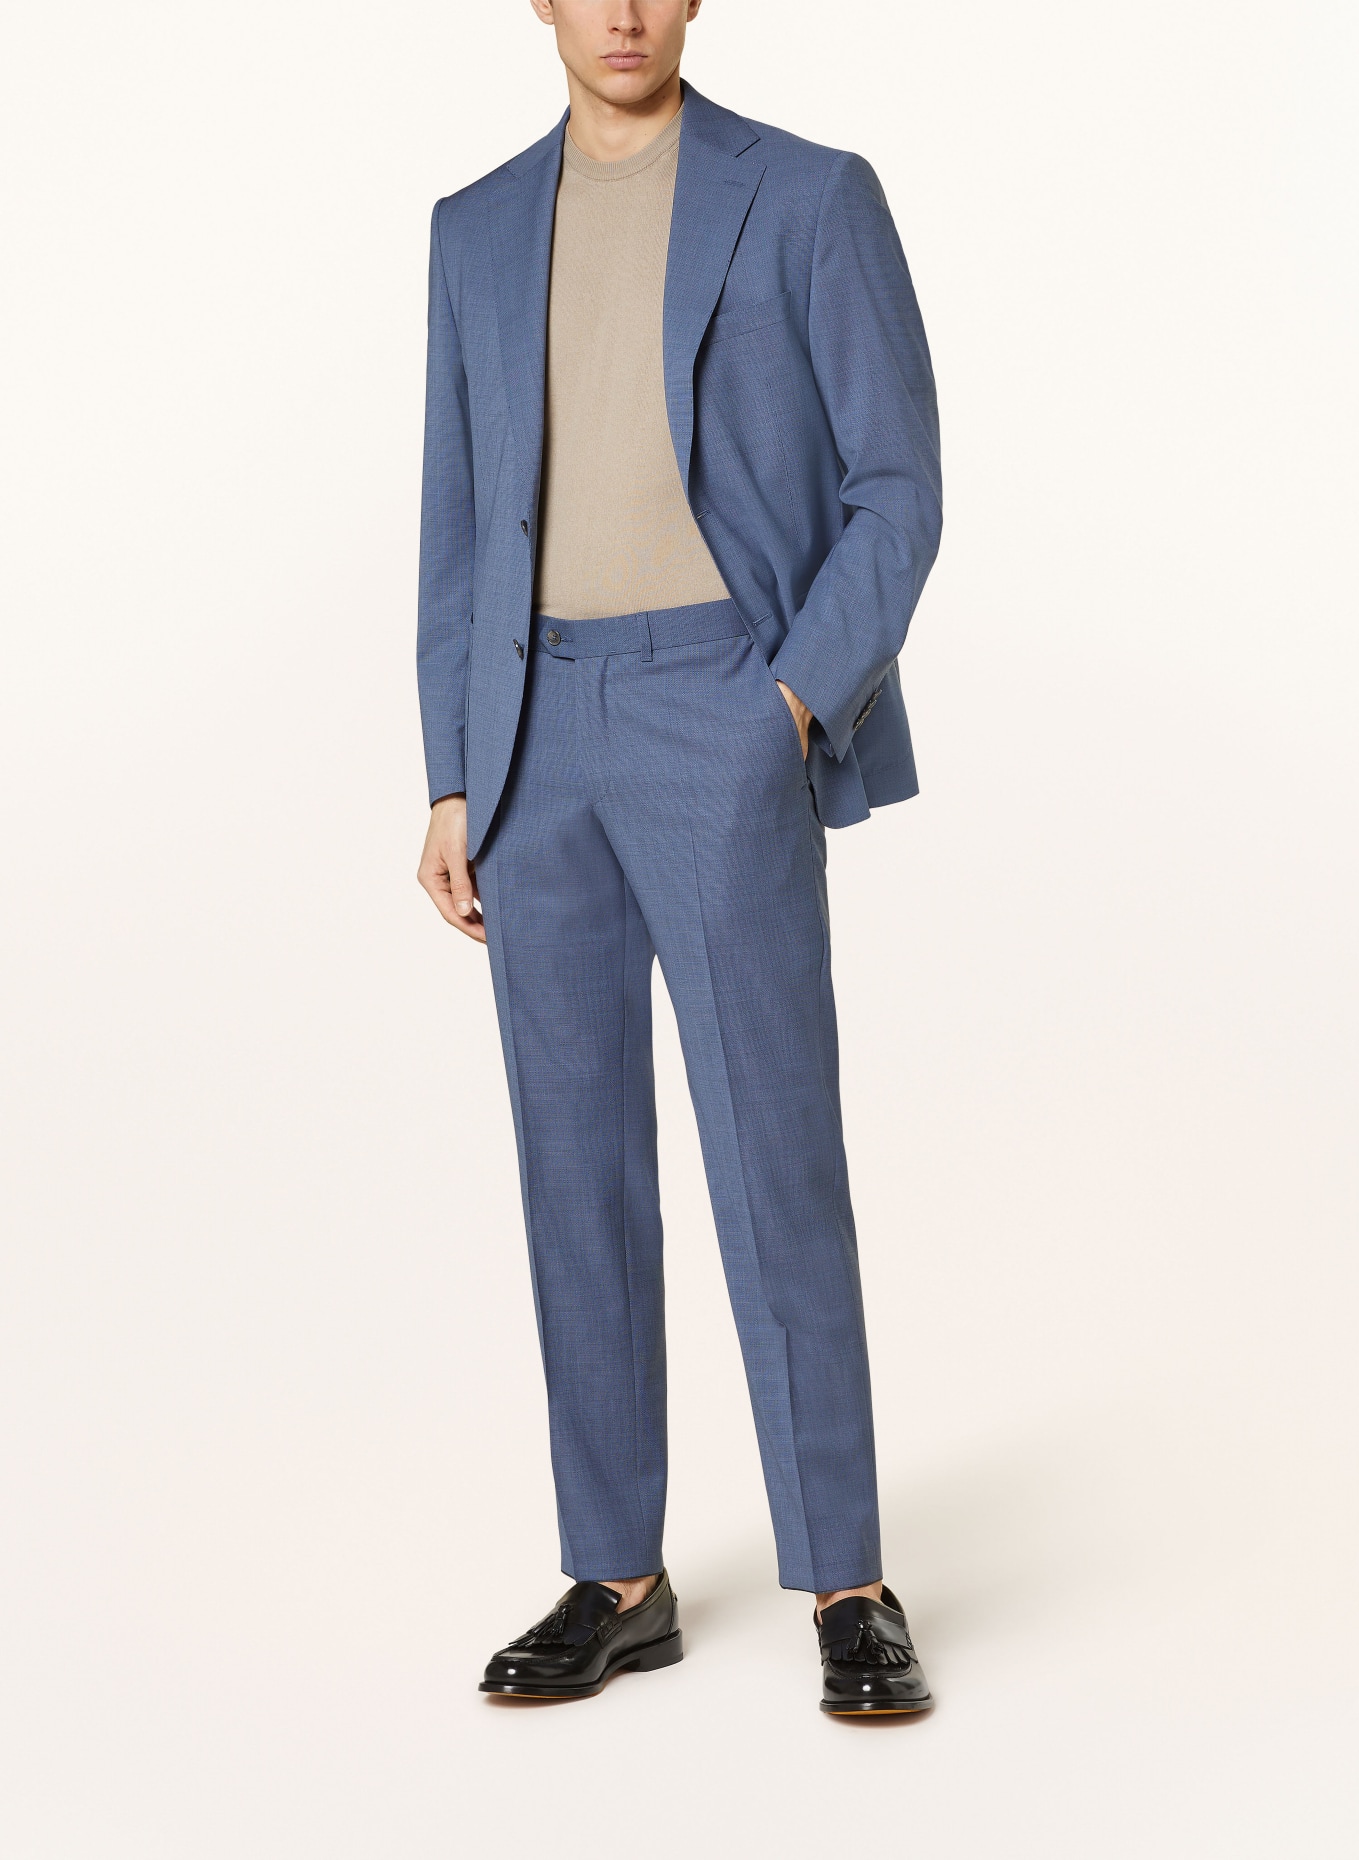 EDUARD DRESSLER Anzughose Slim Fit, Farbe: 036 hellblau (Bild 2)